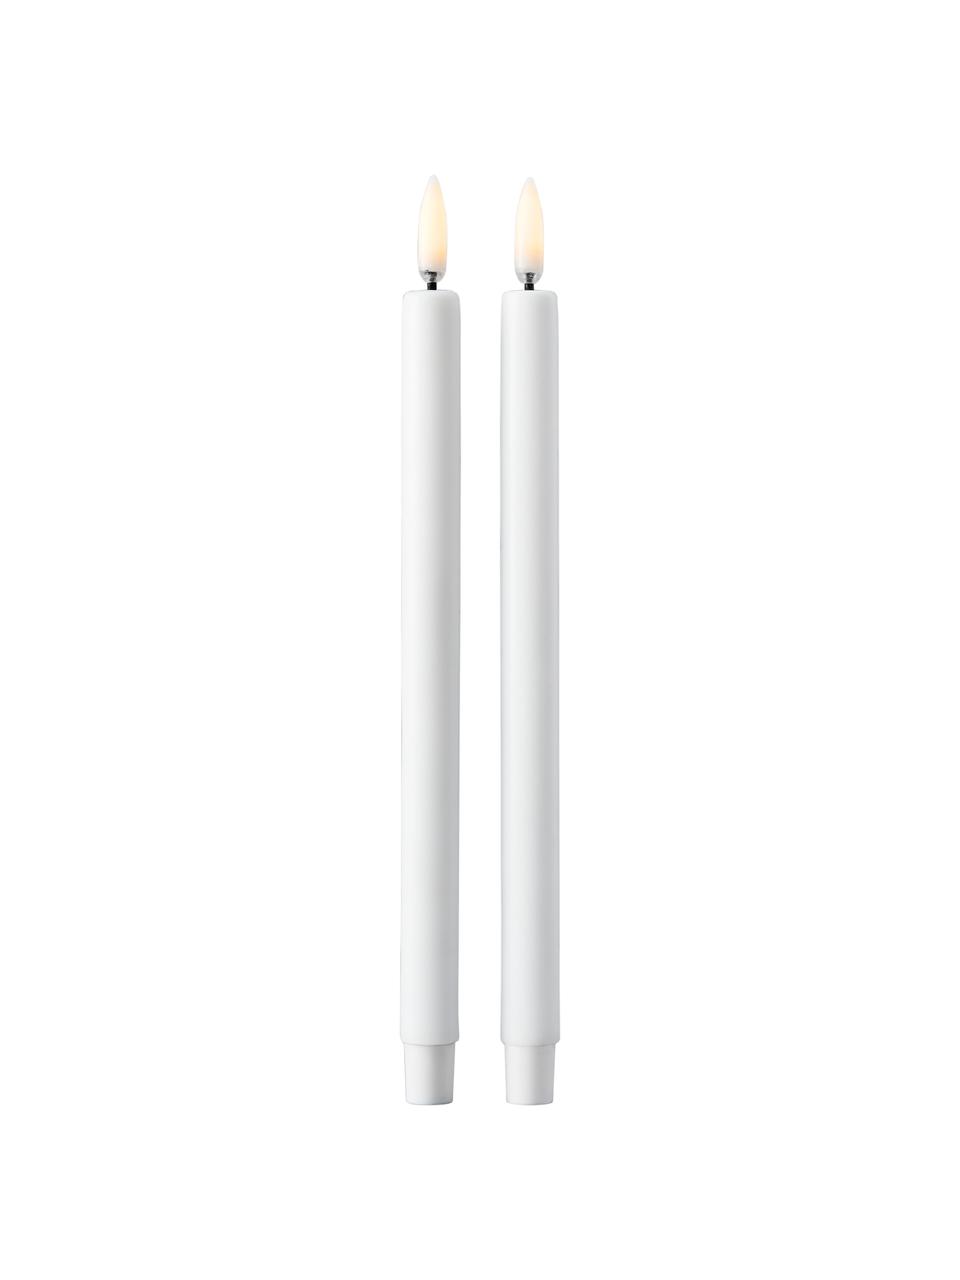 LED-Stabkerzen Uyuni Lighting, 2 Stück, Kunststoff, Weiß, Ø 1 x H 20 cm